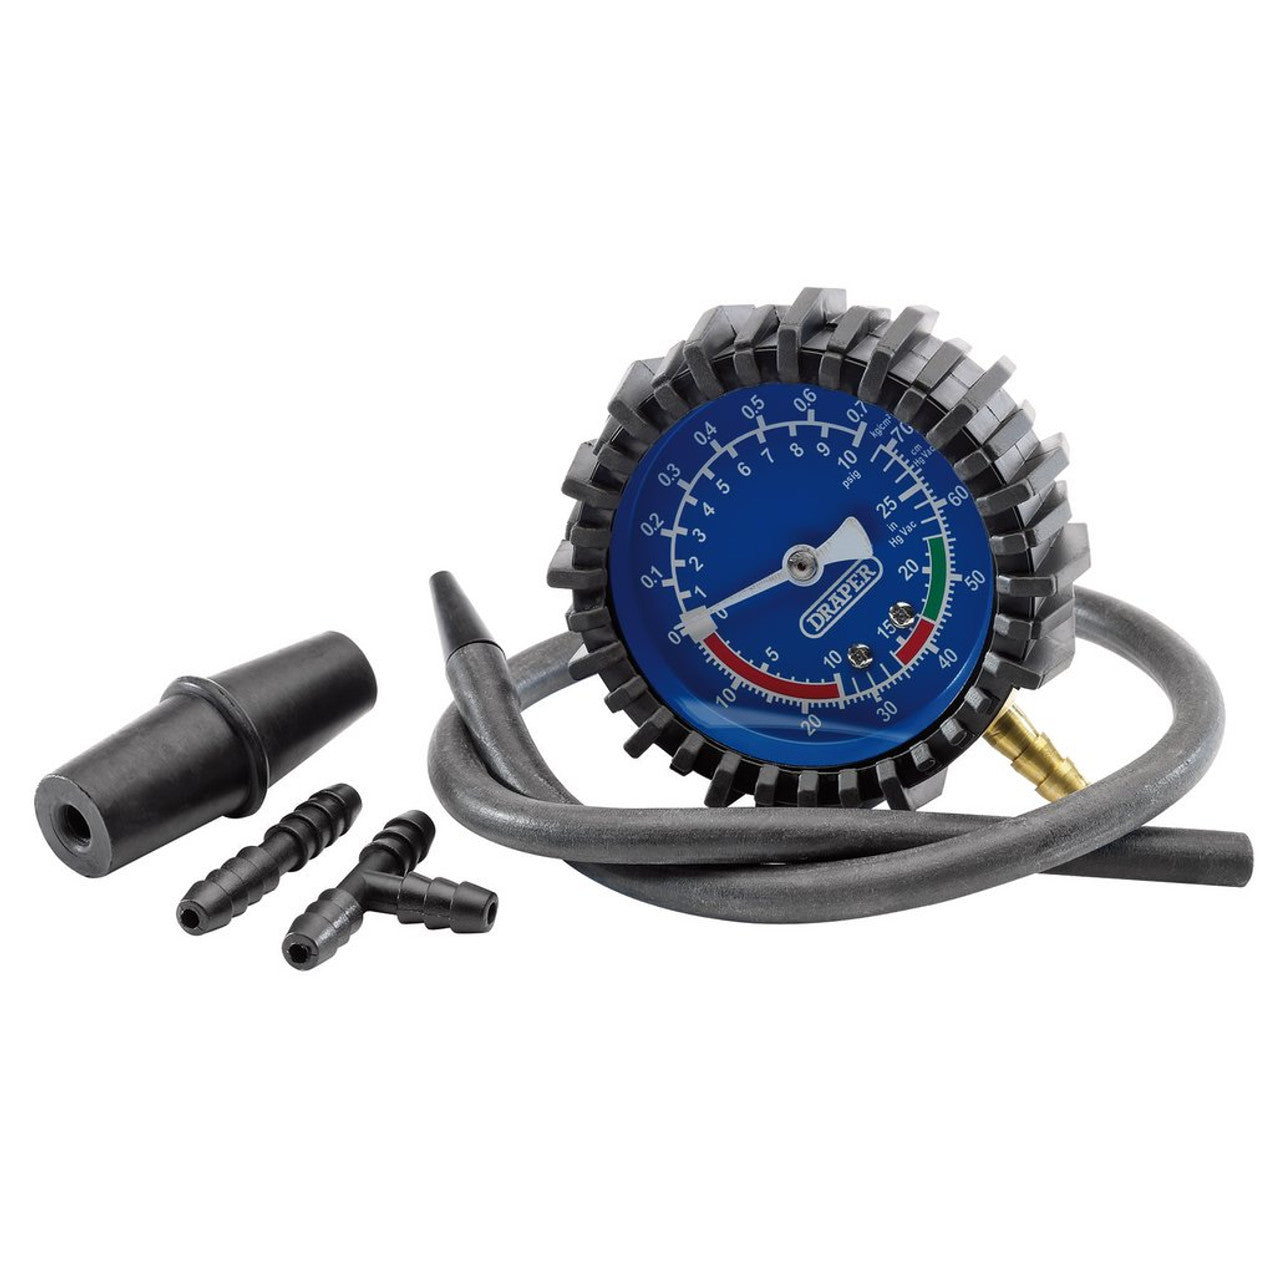 Draper 35881 Vacuum and Pressure Test Kit (5 Piece)